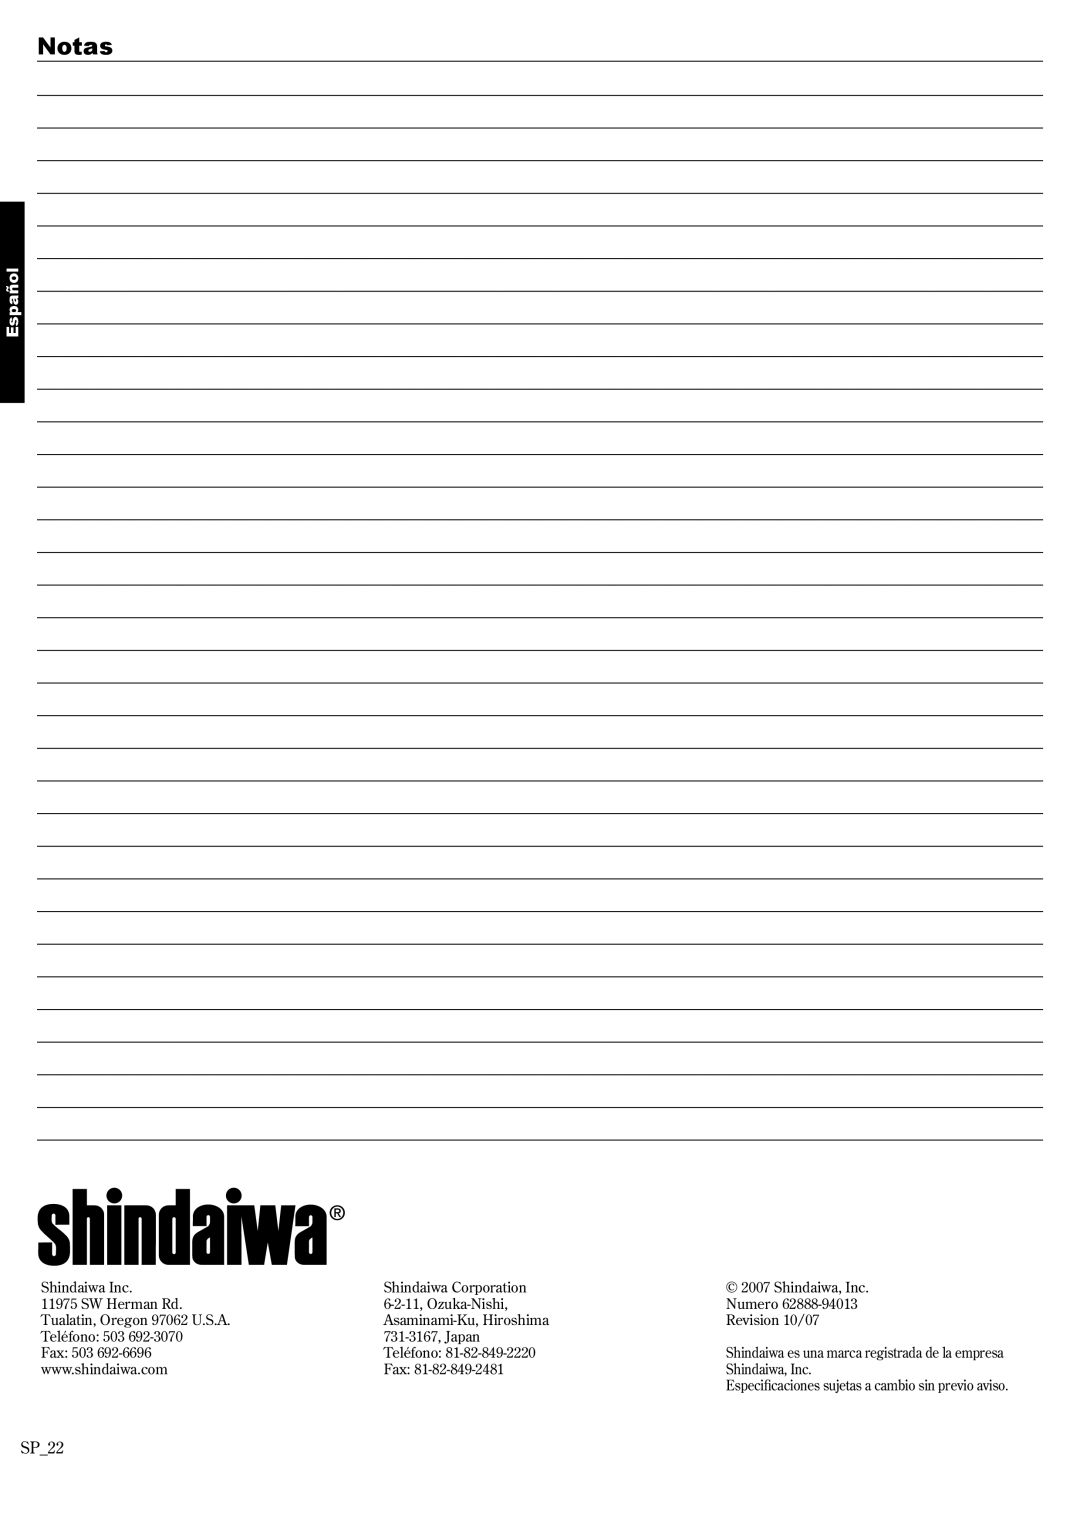 Shindaiwa 62888-94013, P231 manual Notas, Español, SP22 